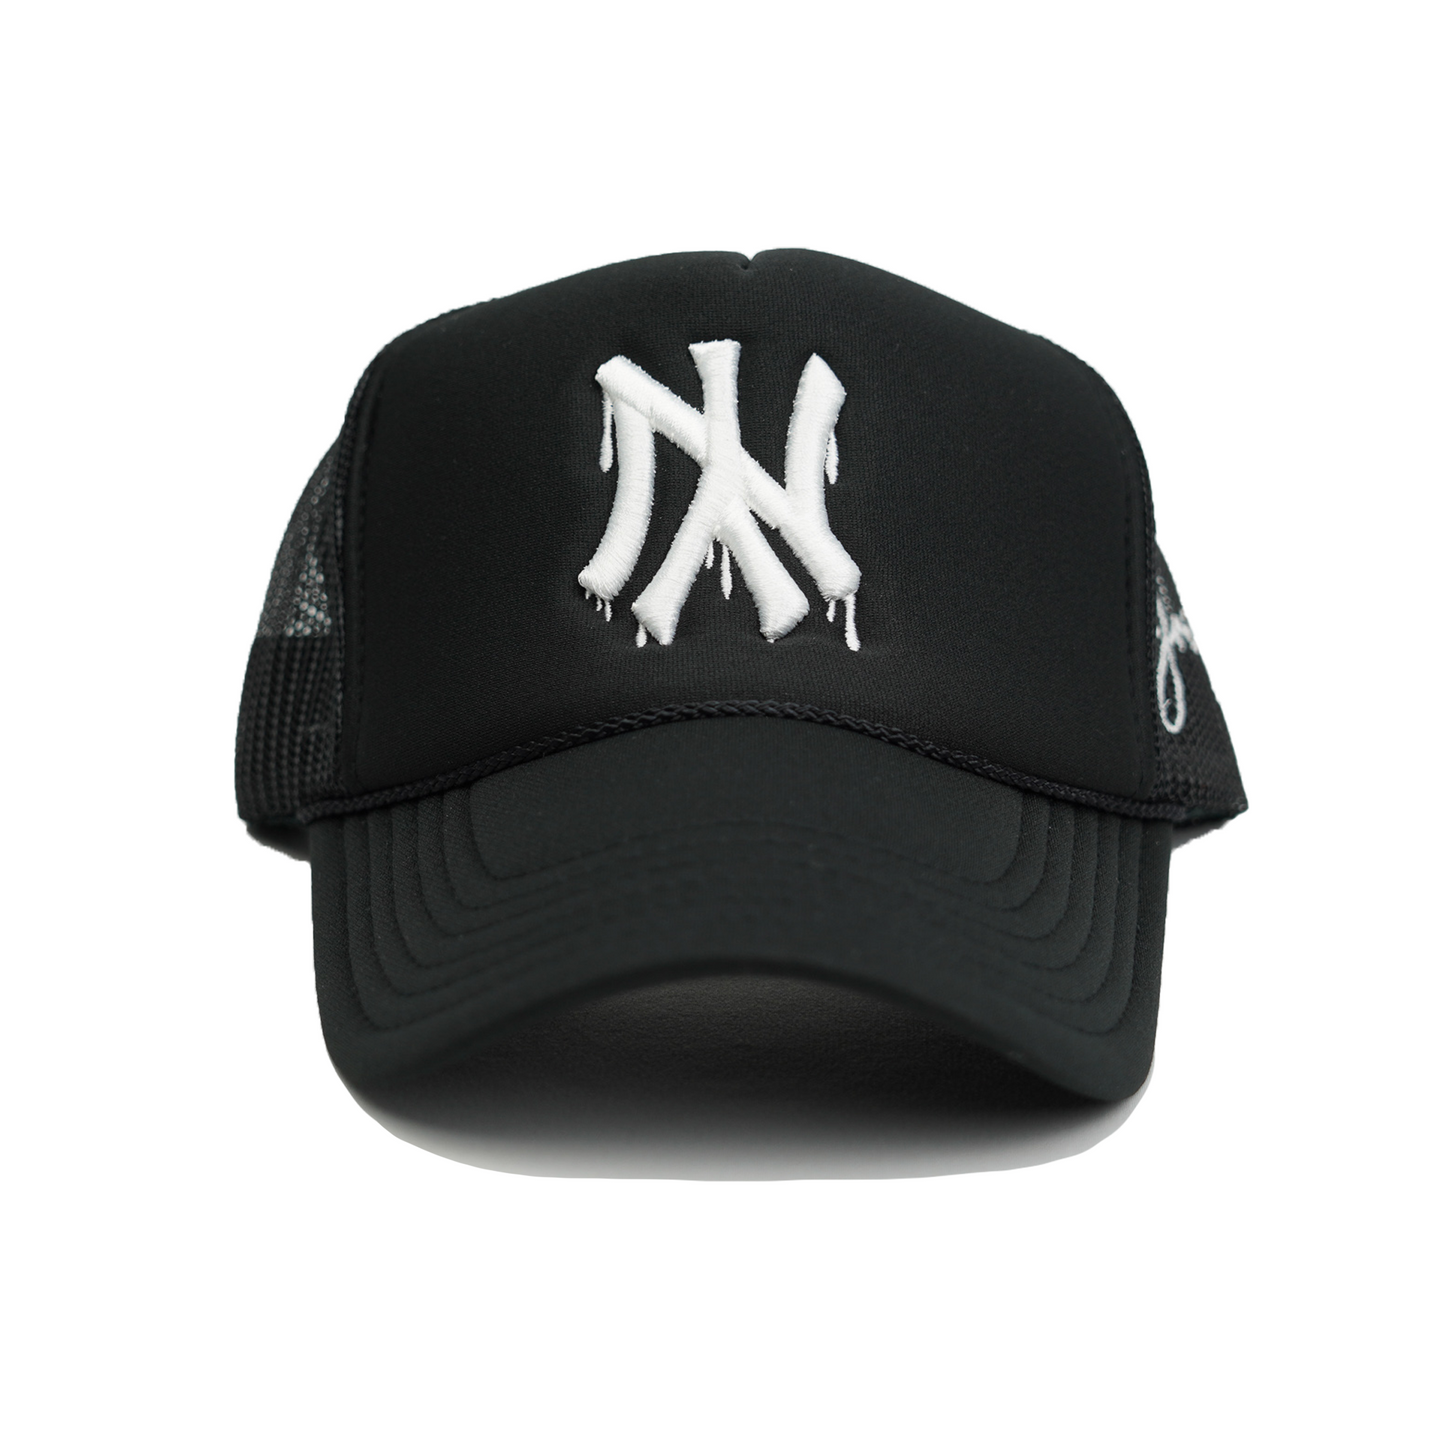 NY Dripping Trucker Hat (BLACK)